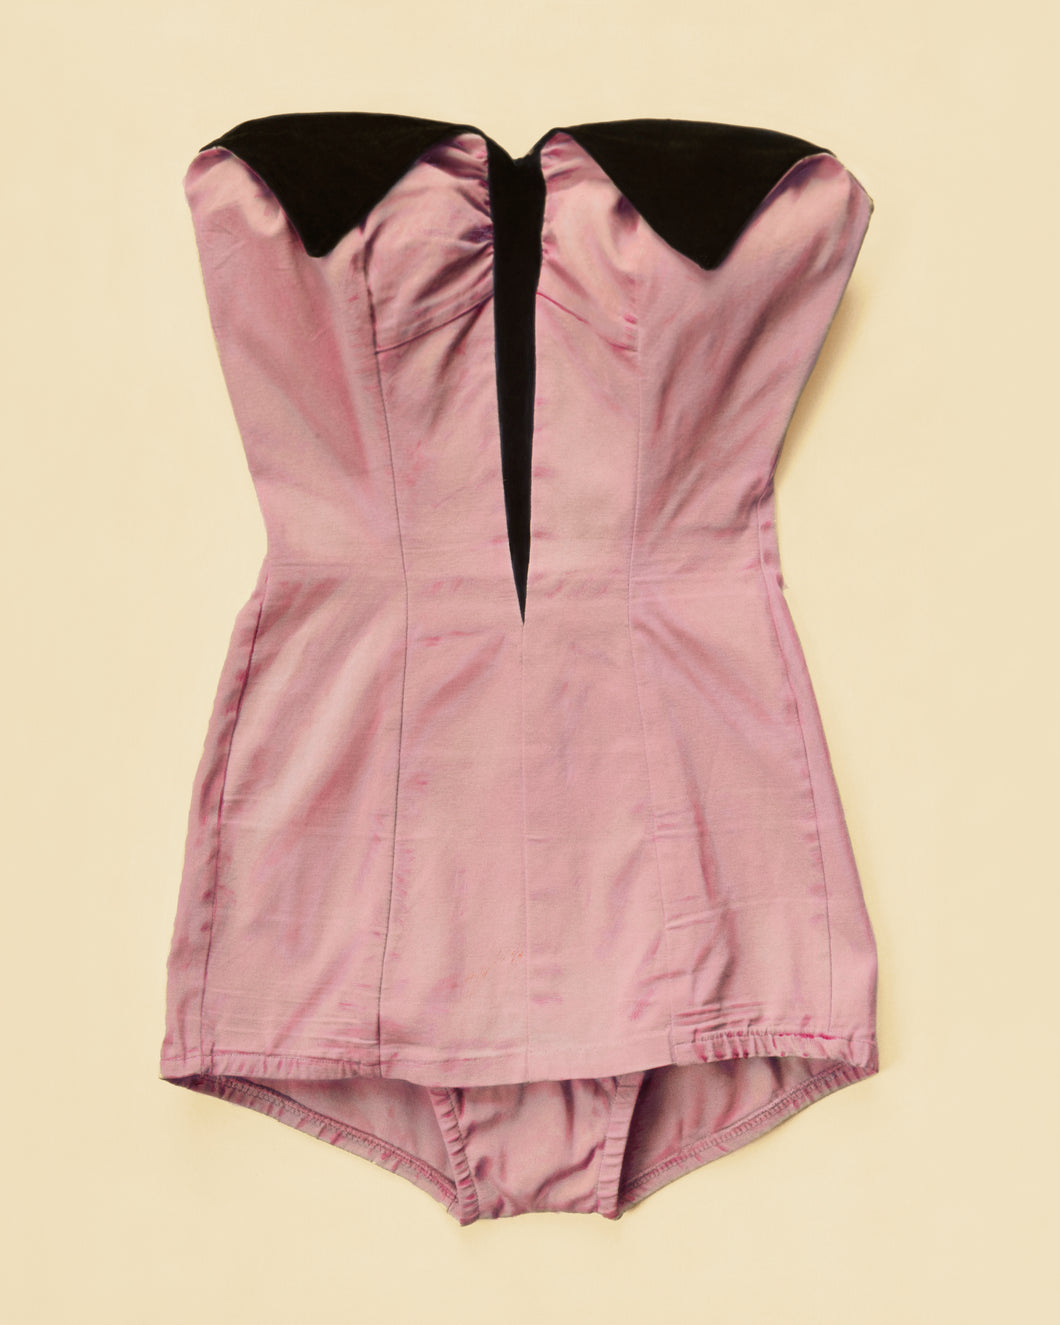 Pink Catalina Swim Suit Artwork